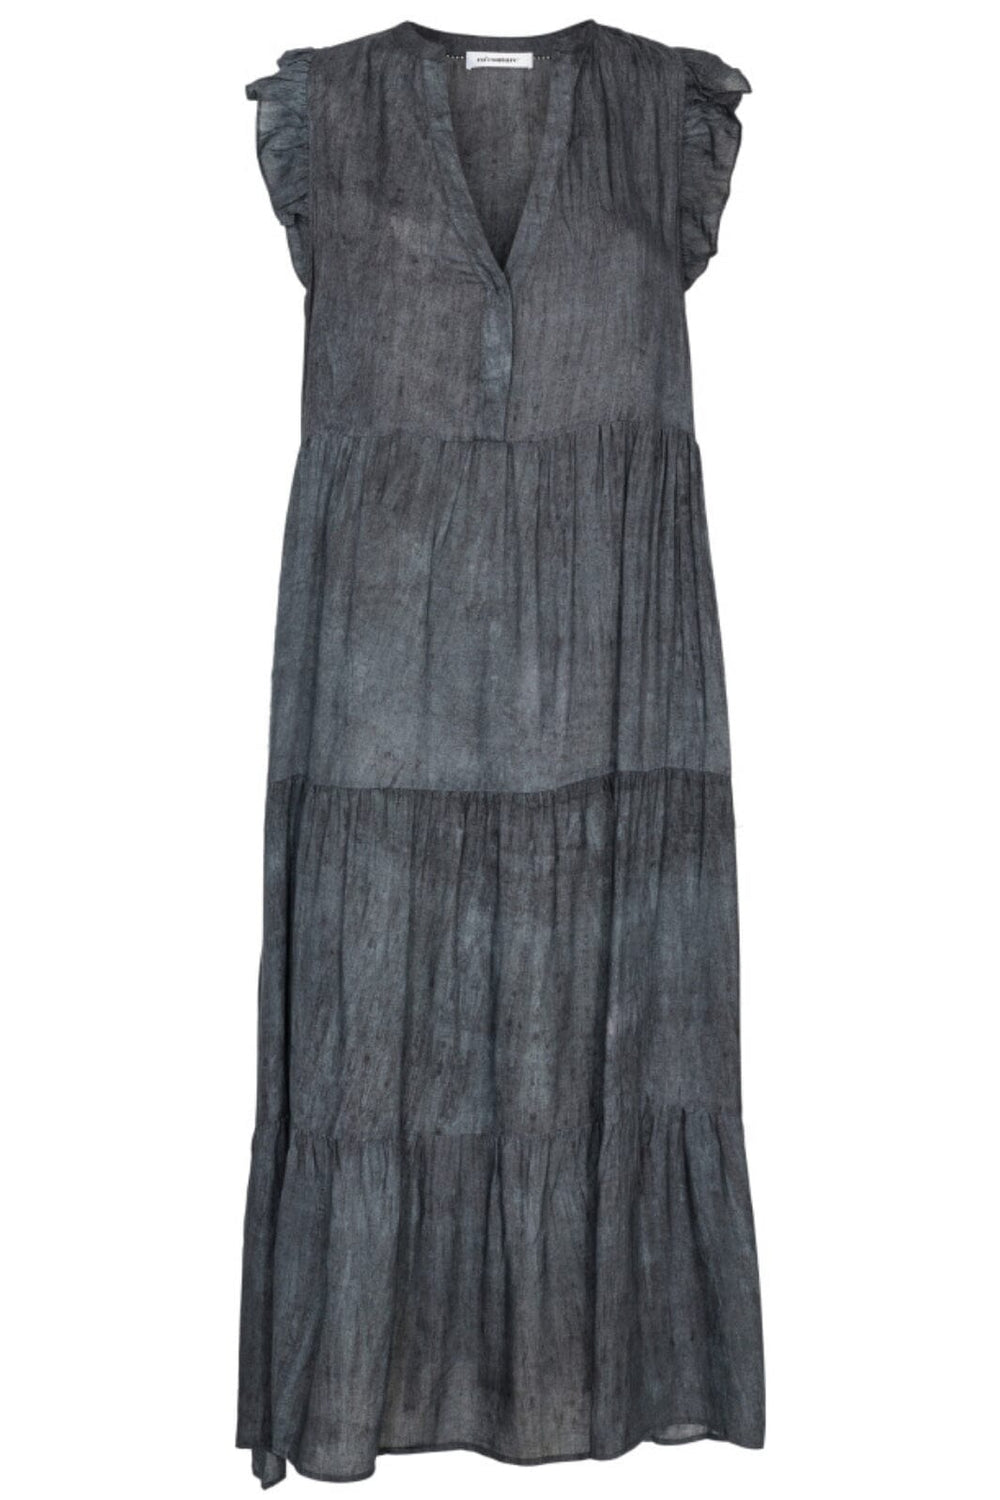 Co´couture - Coldcc Dye Ss Floor Dress 96685 - 140 Dark Grey Kjoler 